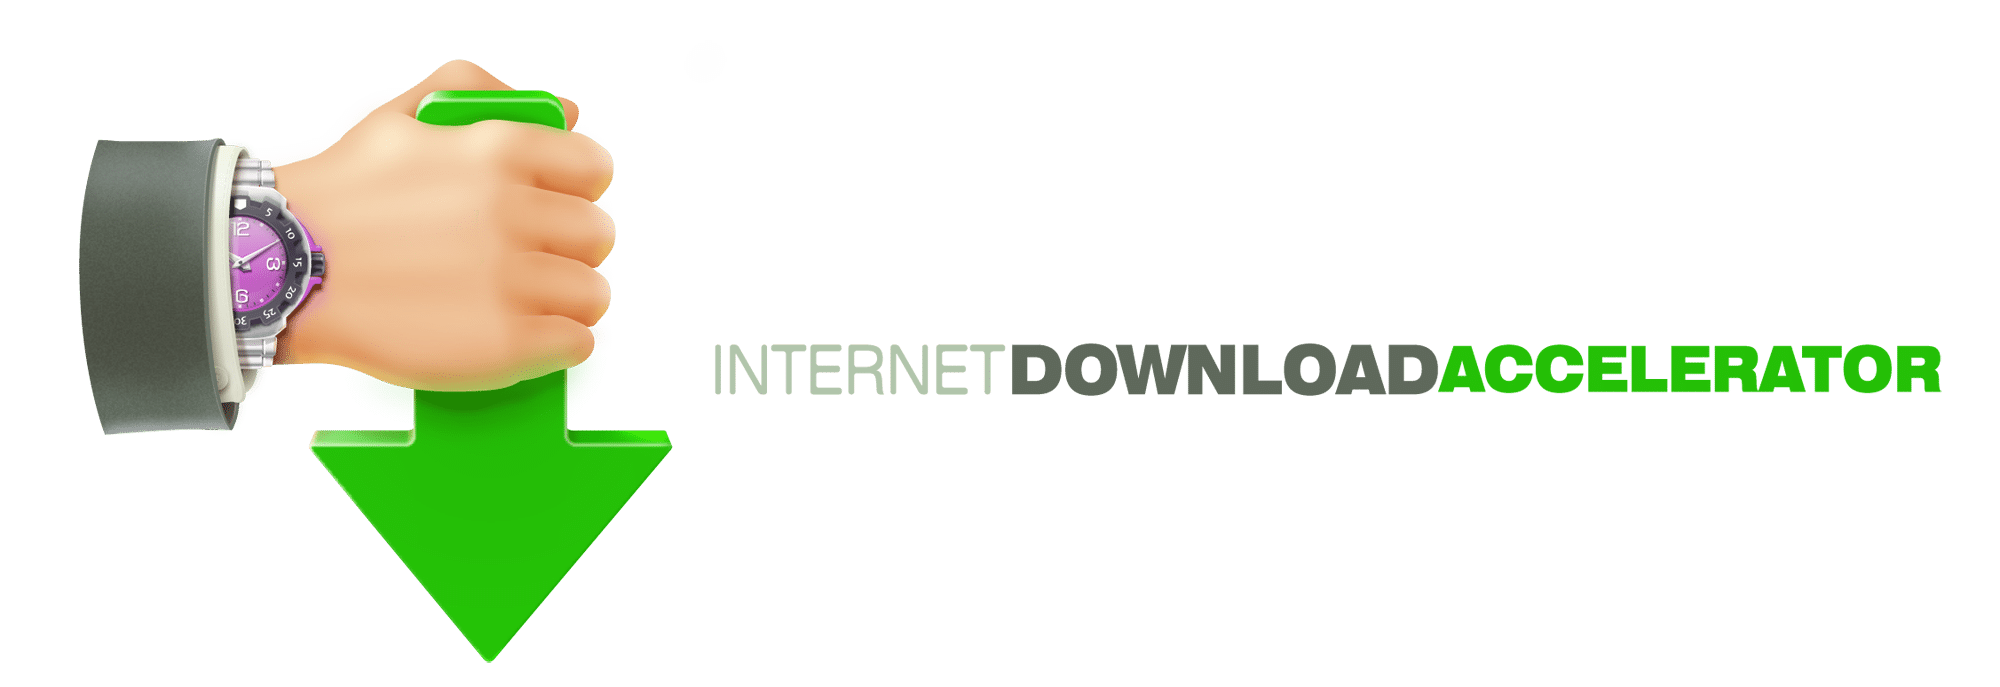 Internet Download Accelerator Logo